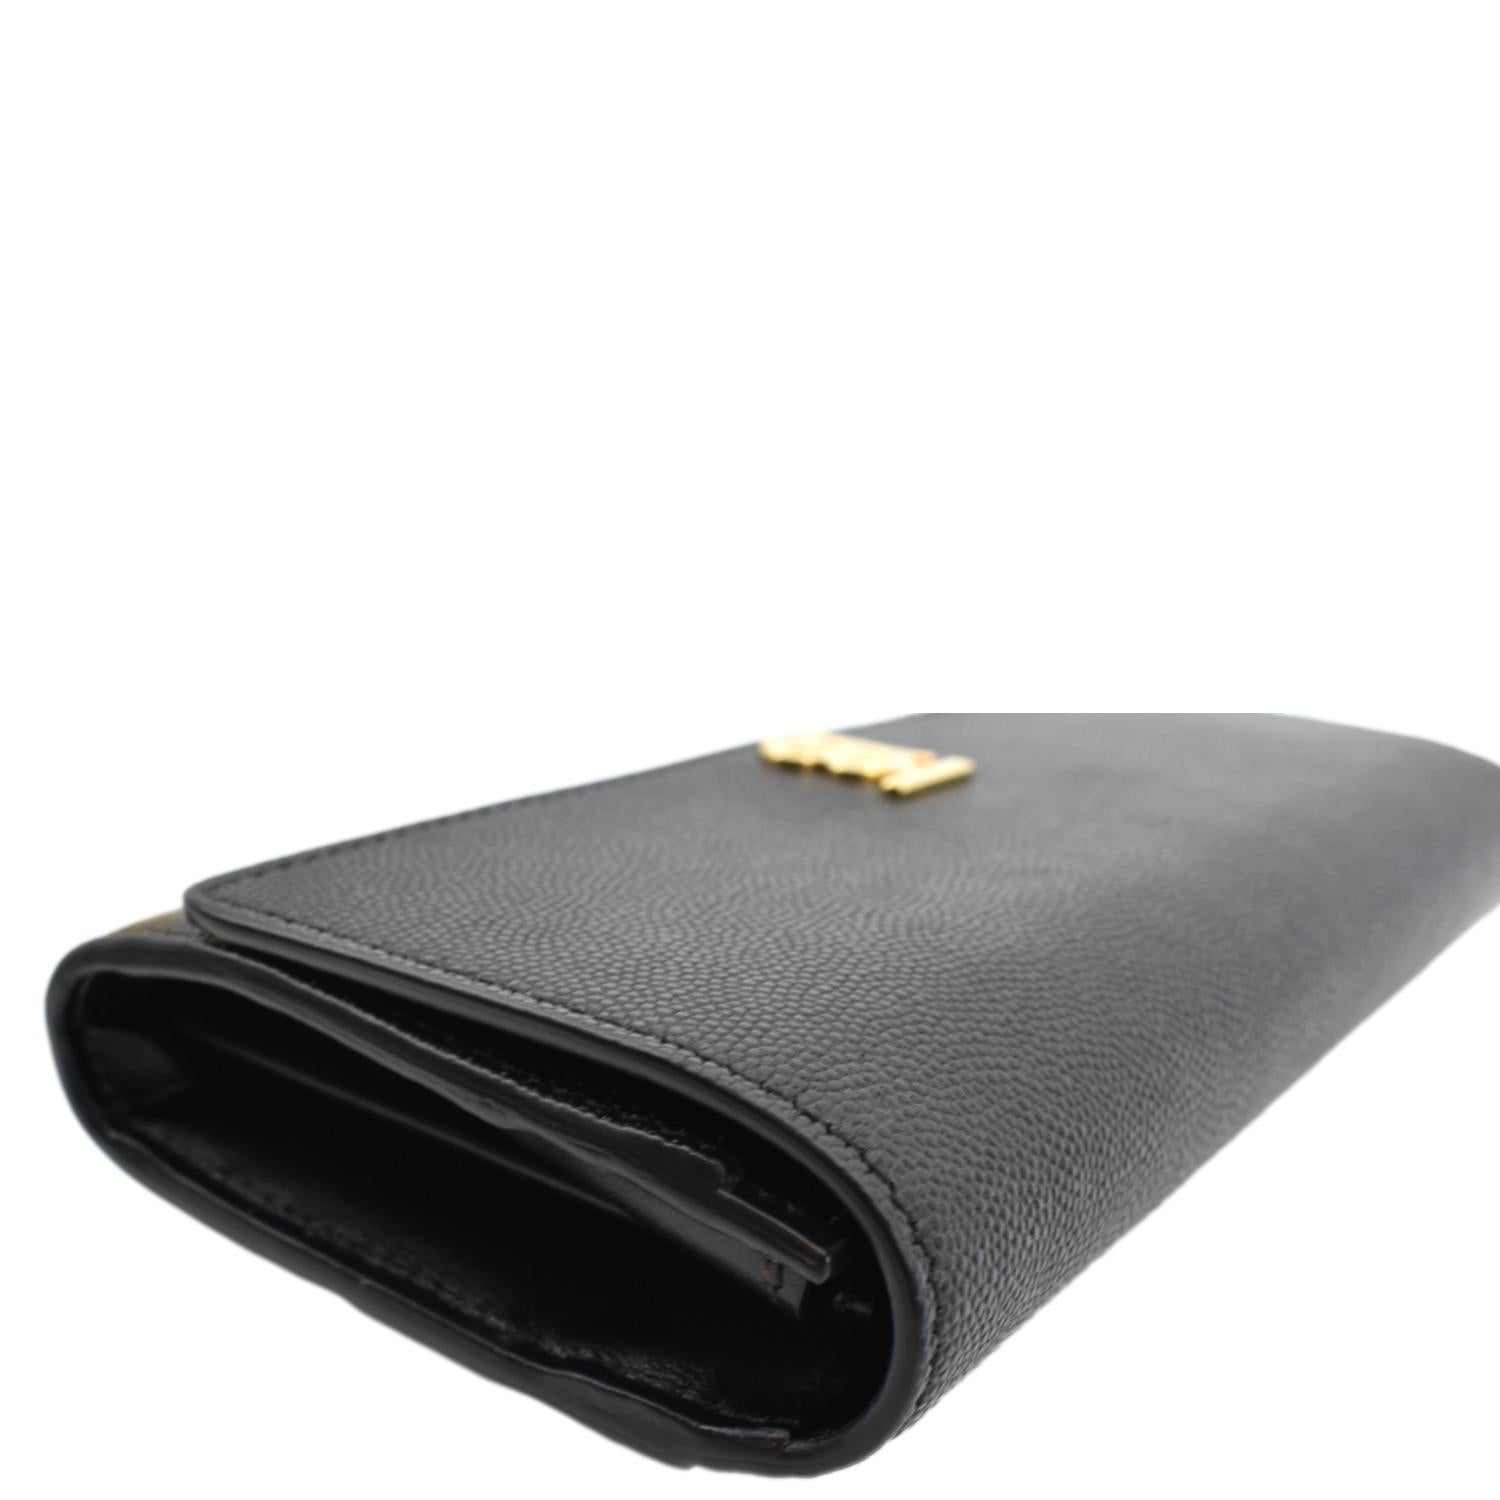 Burberry Tb Monogram Bi-fold Leather Wallet for Men